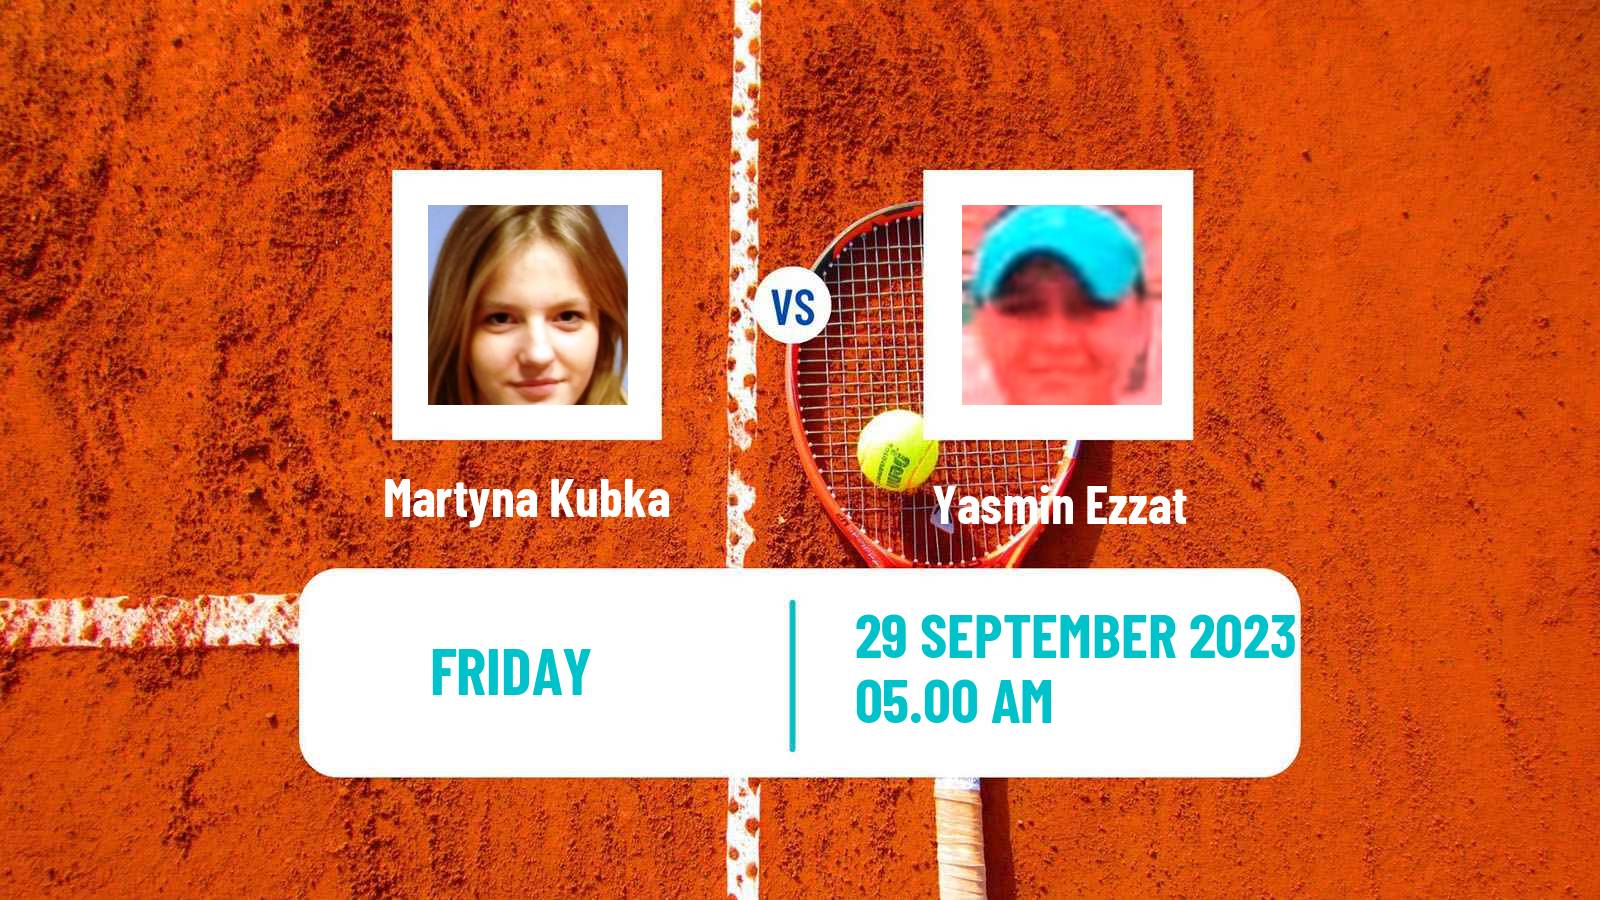 Tennis ITF W15 Sharm Elsheikh 12 Women Martyna Kubka - Yasmin Ezzat